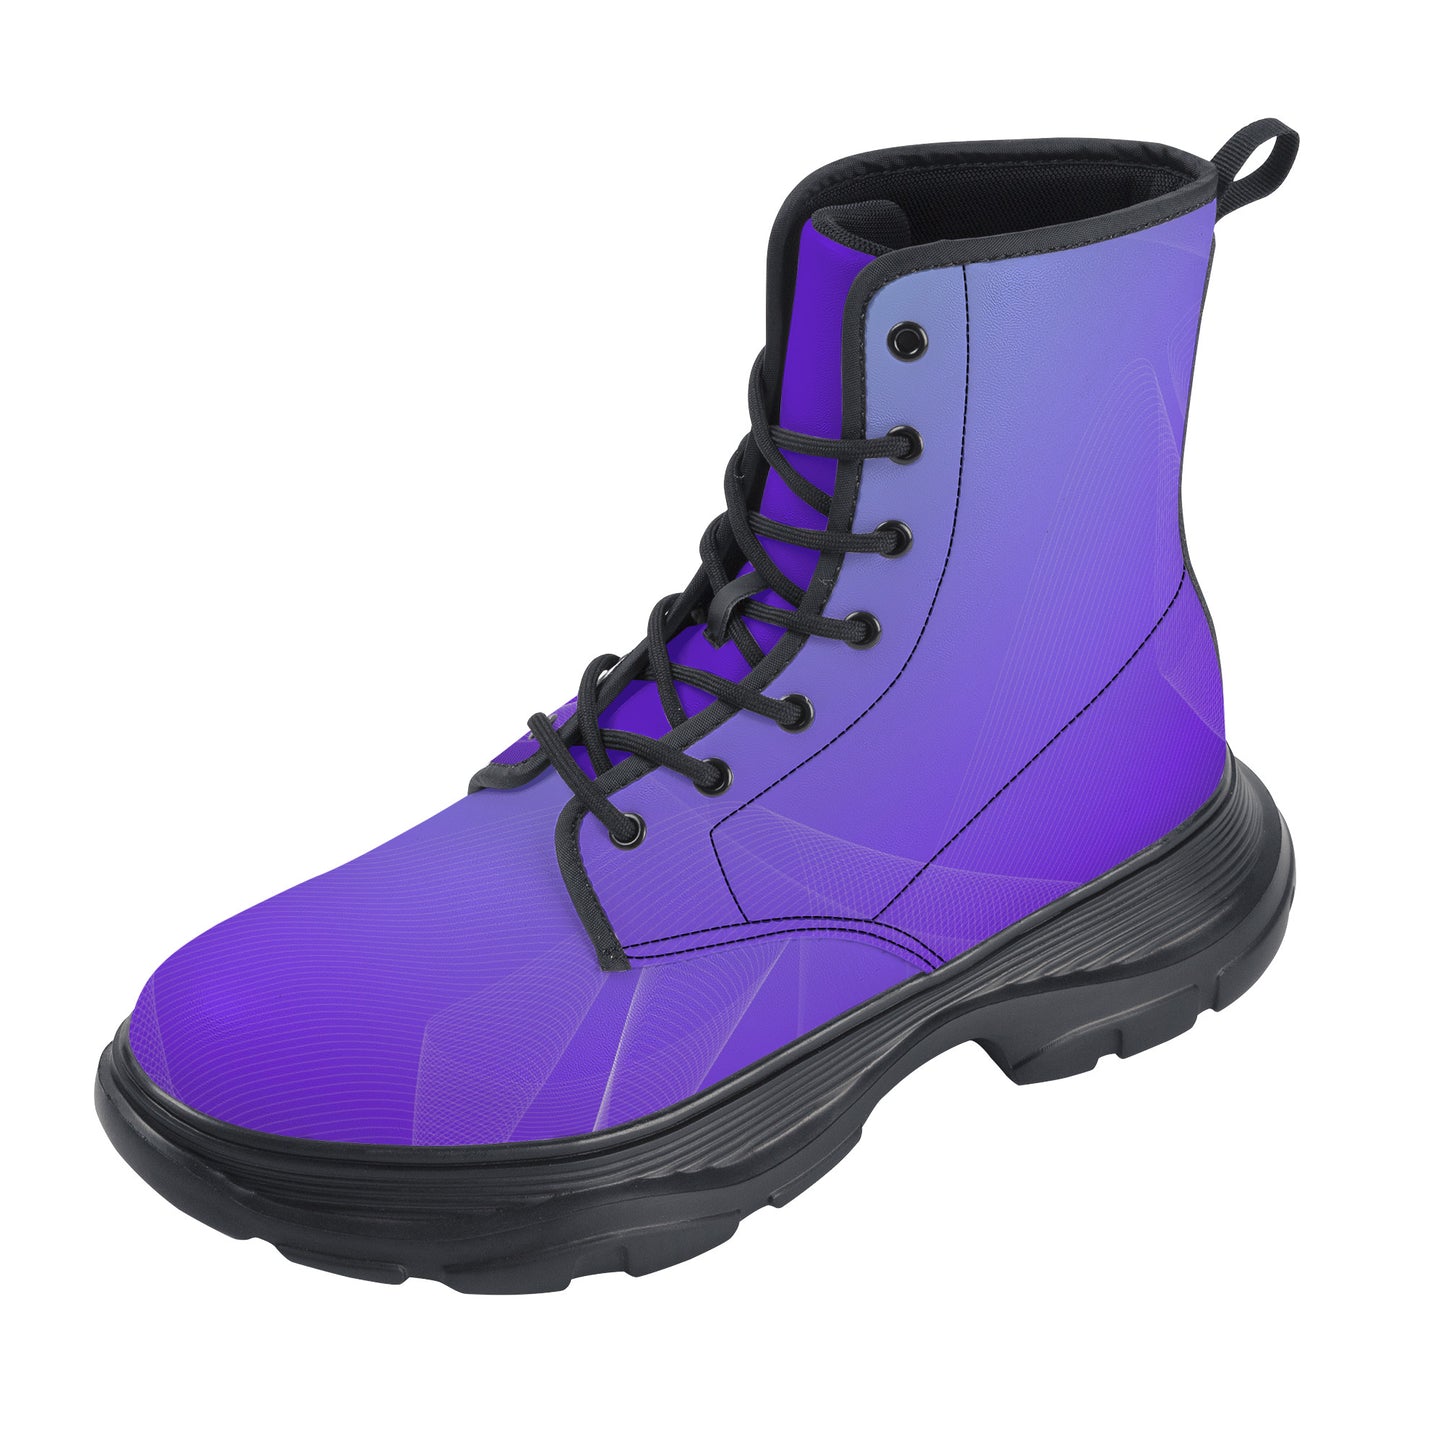 Unisex Chunky Boots - Purple